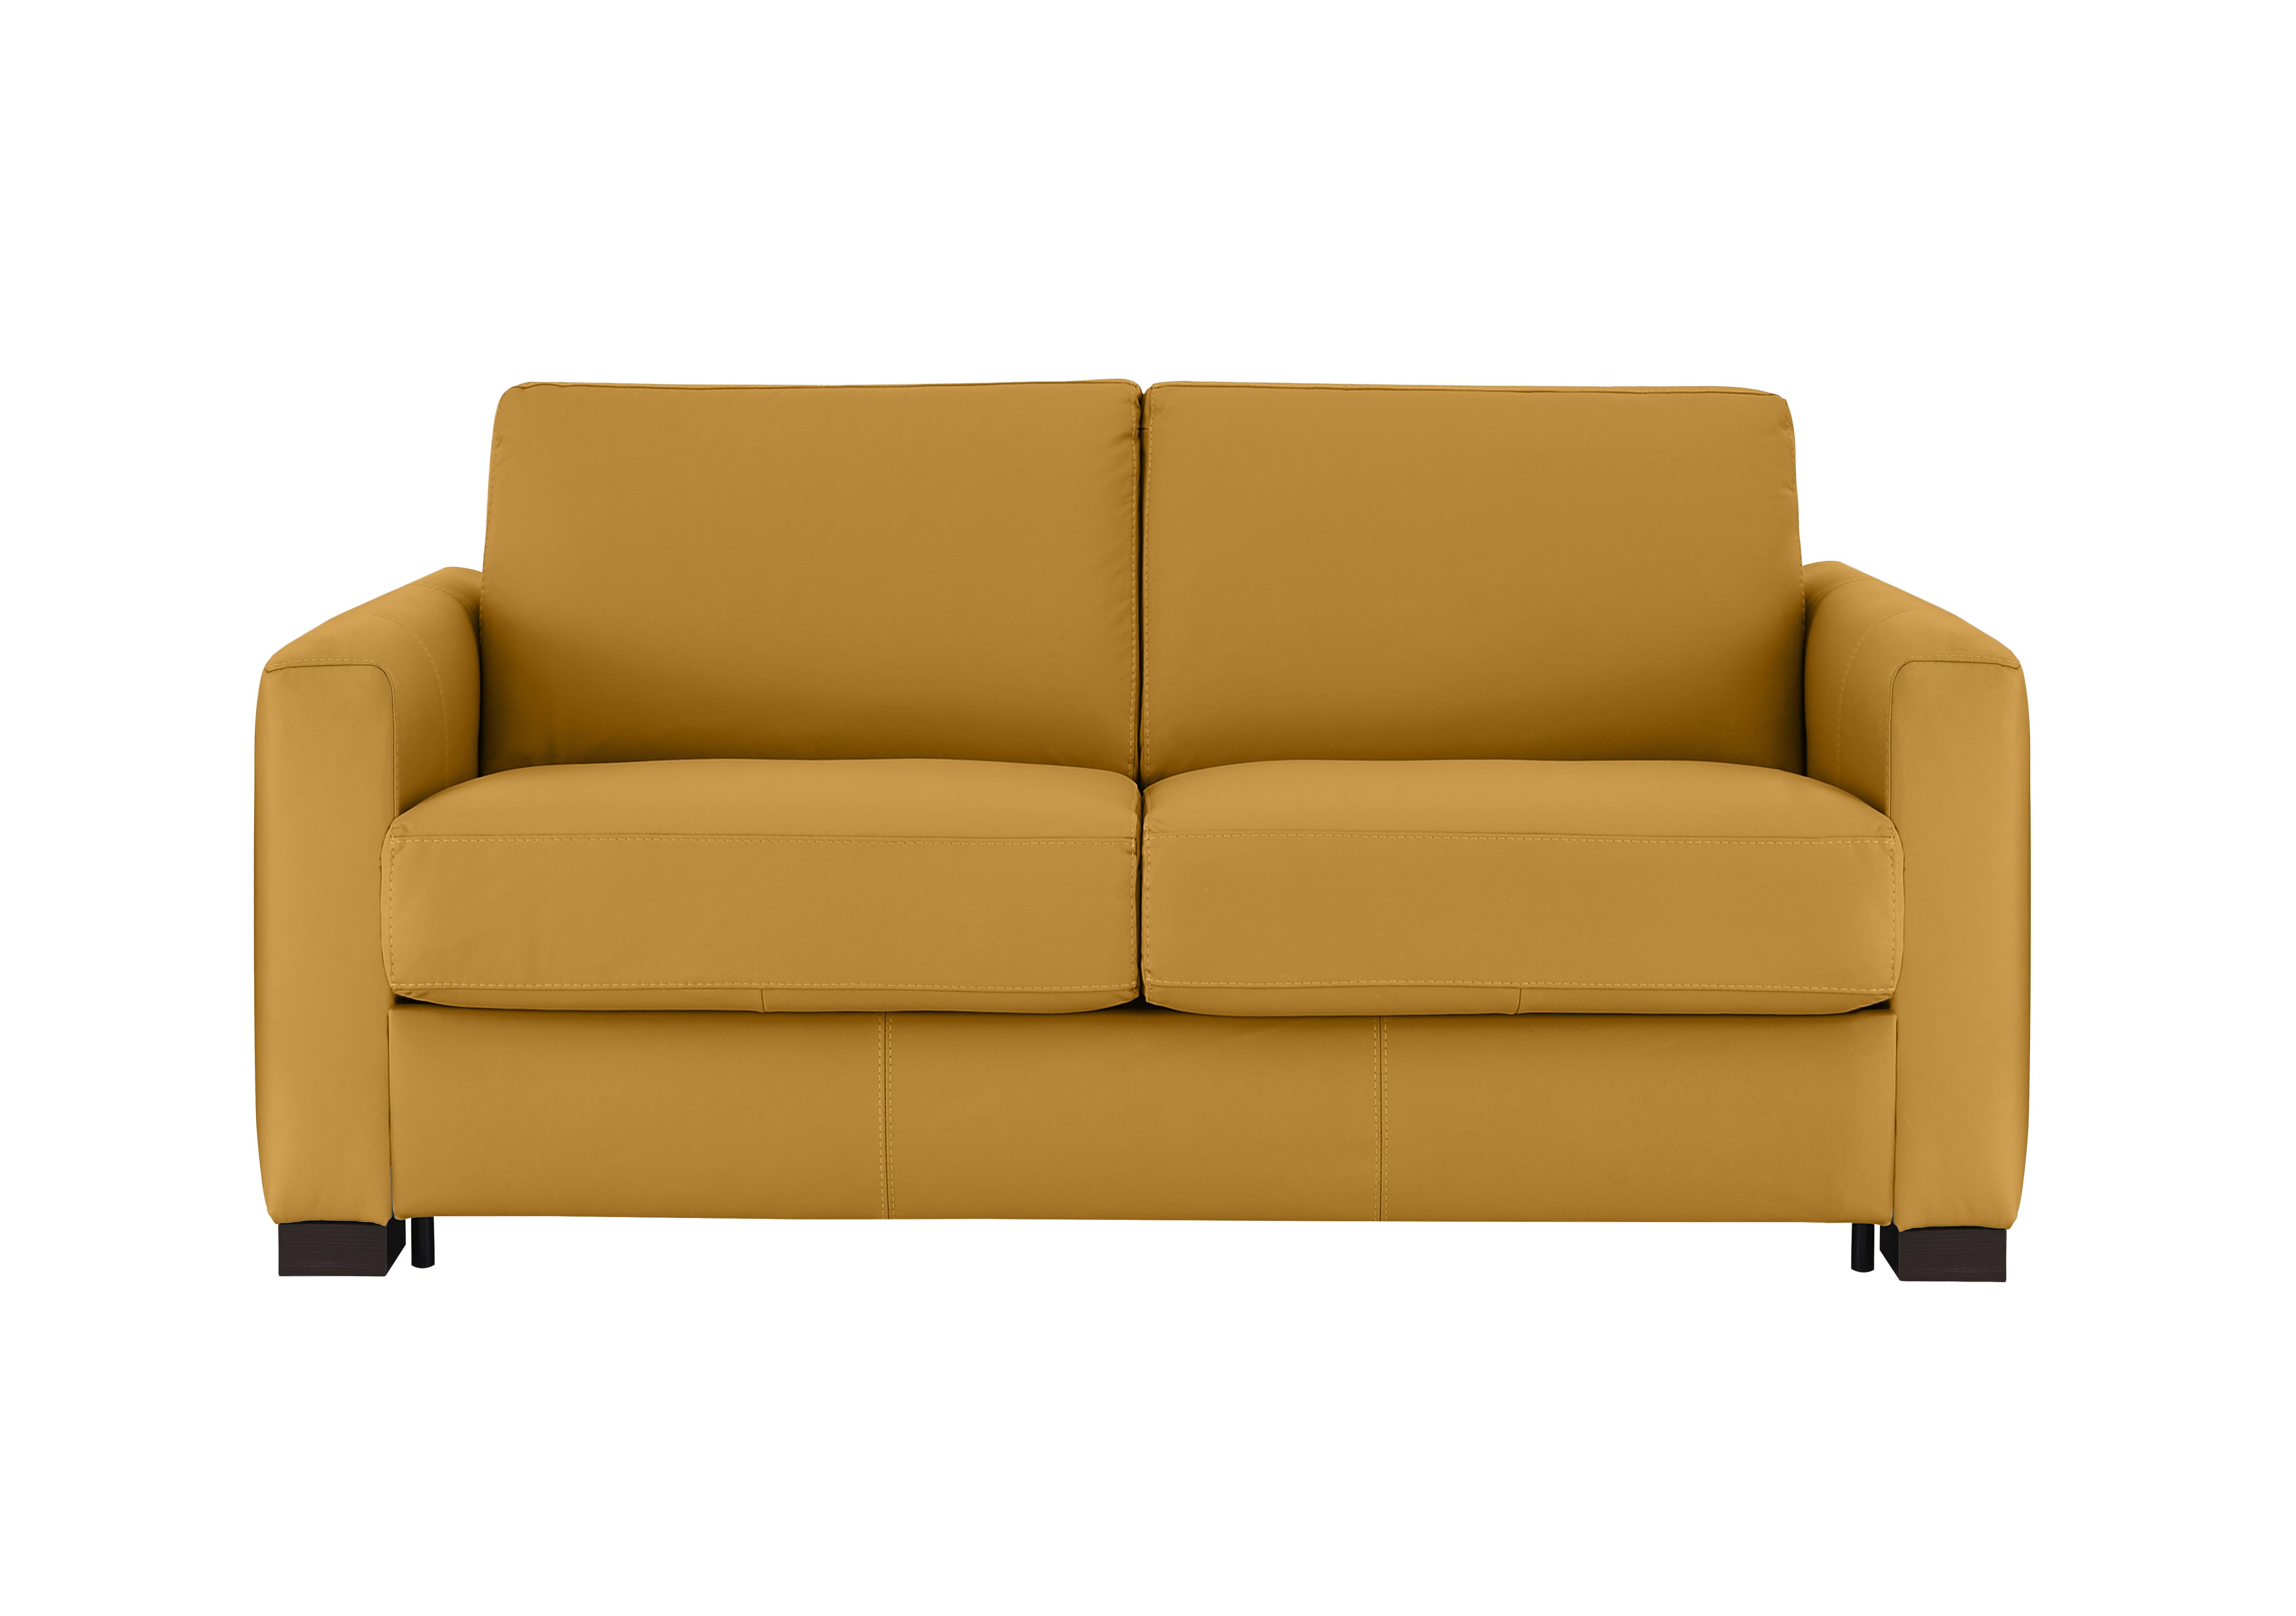 Alcova 2 Seater Leather Sofa Bed with Box Arms in Torello Senape 355 on Furniture Village